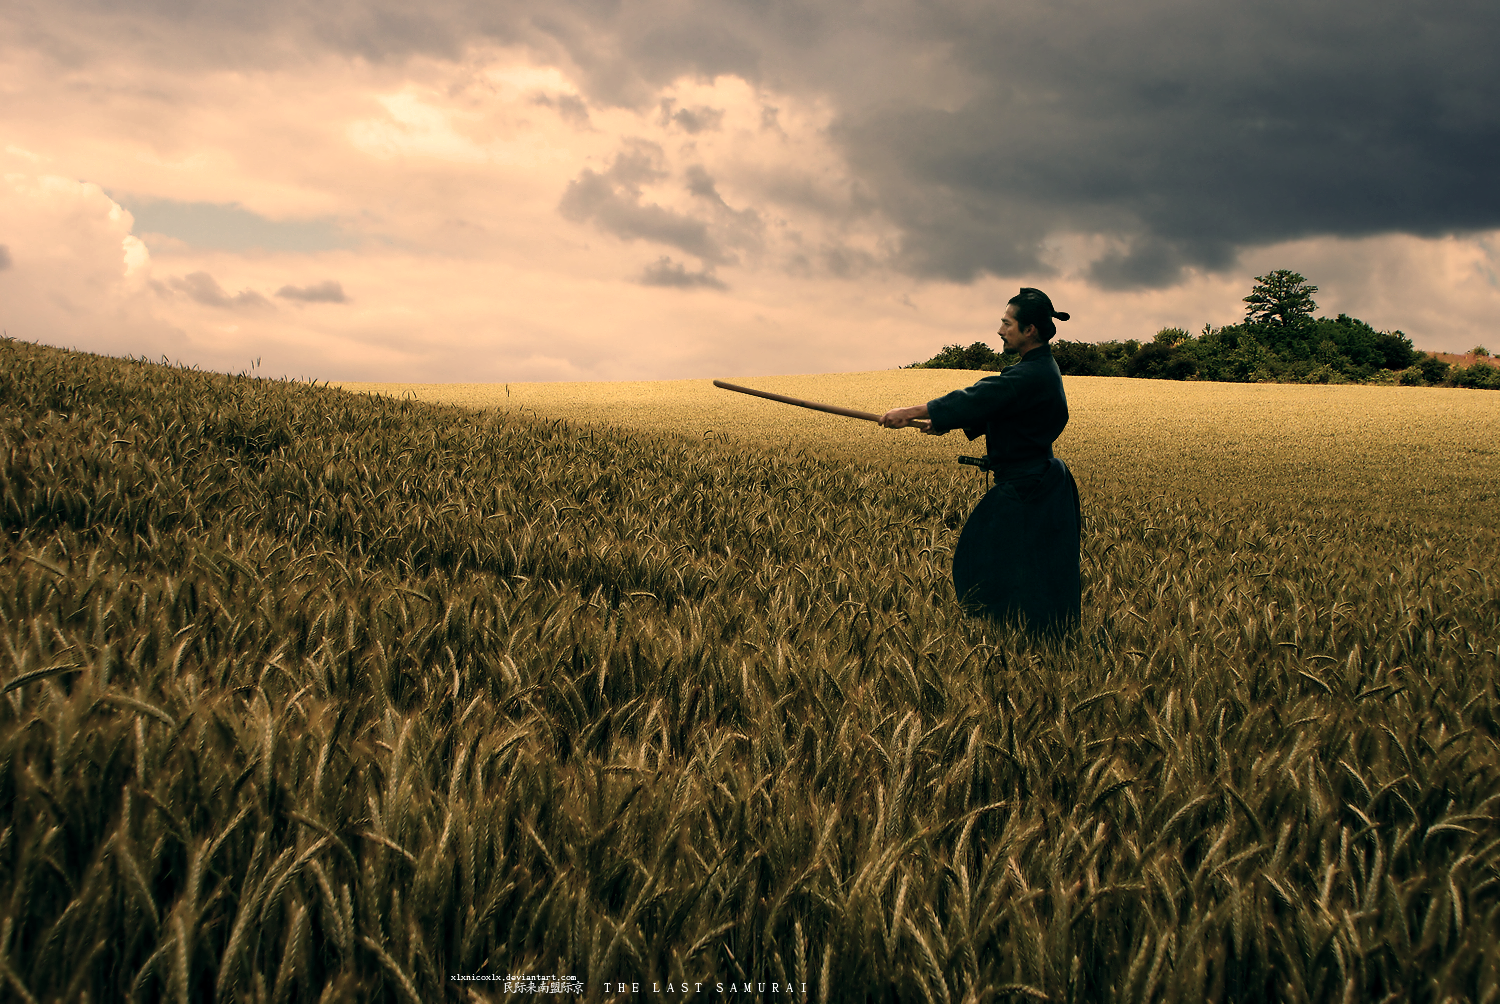 The Last Samurai by xlxnicoxlx on DeviantArt